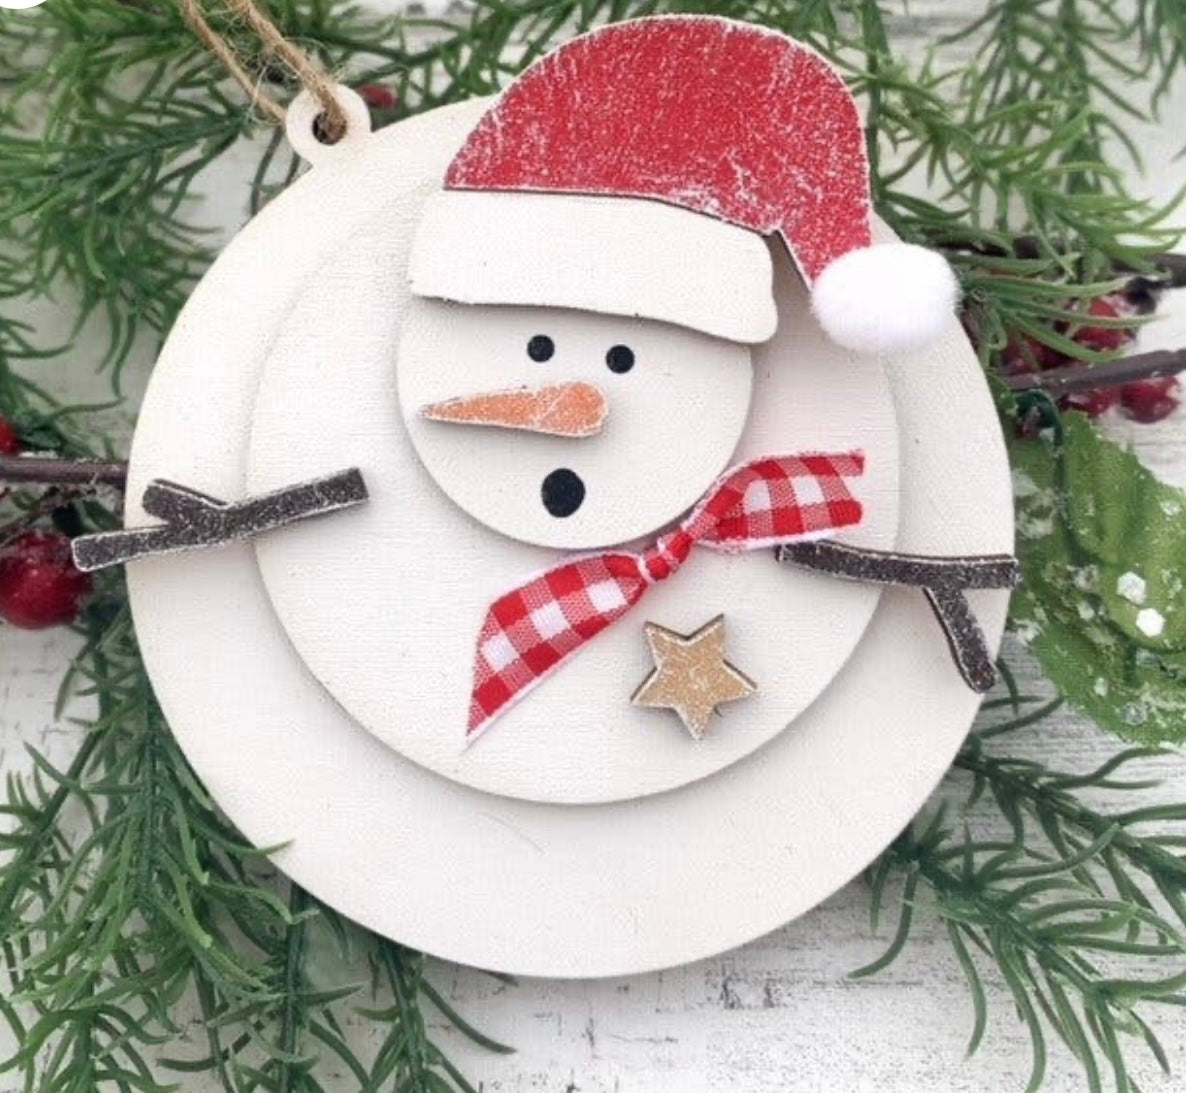 Melting Snowmen Ornaments